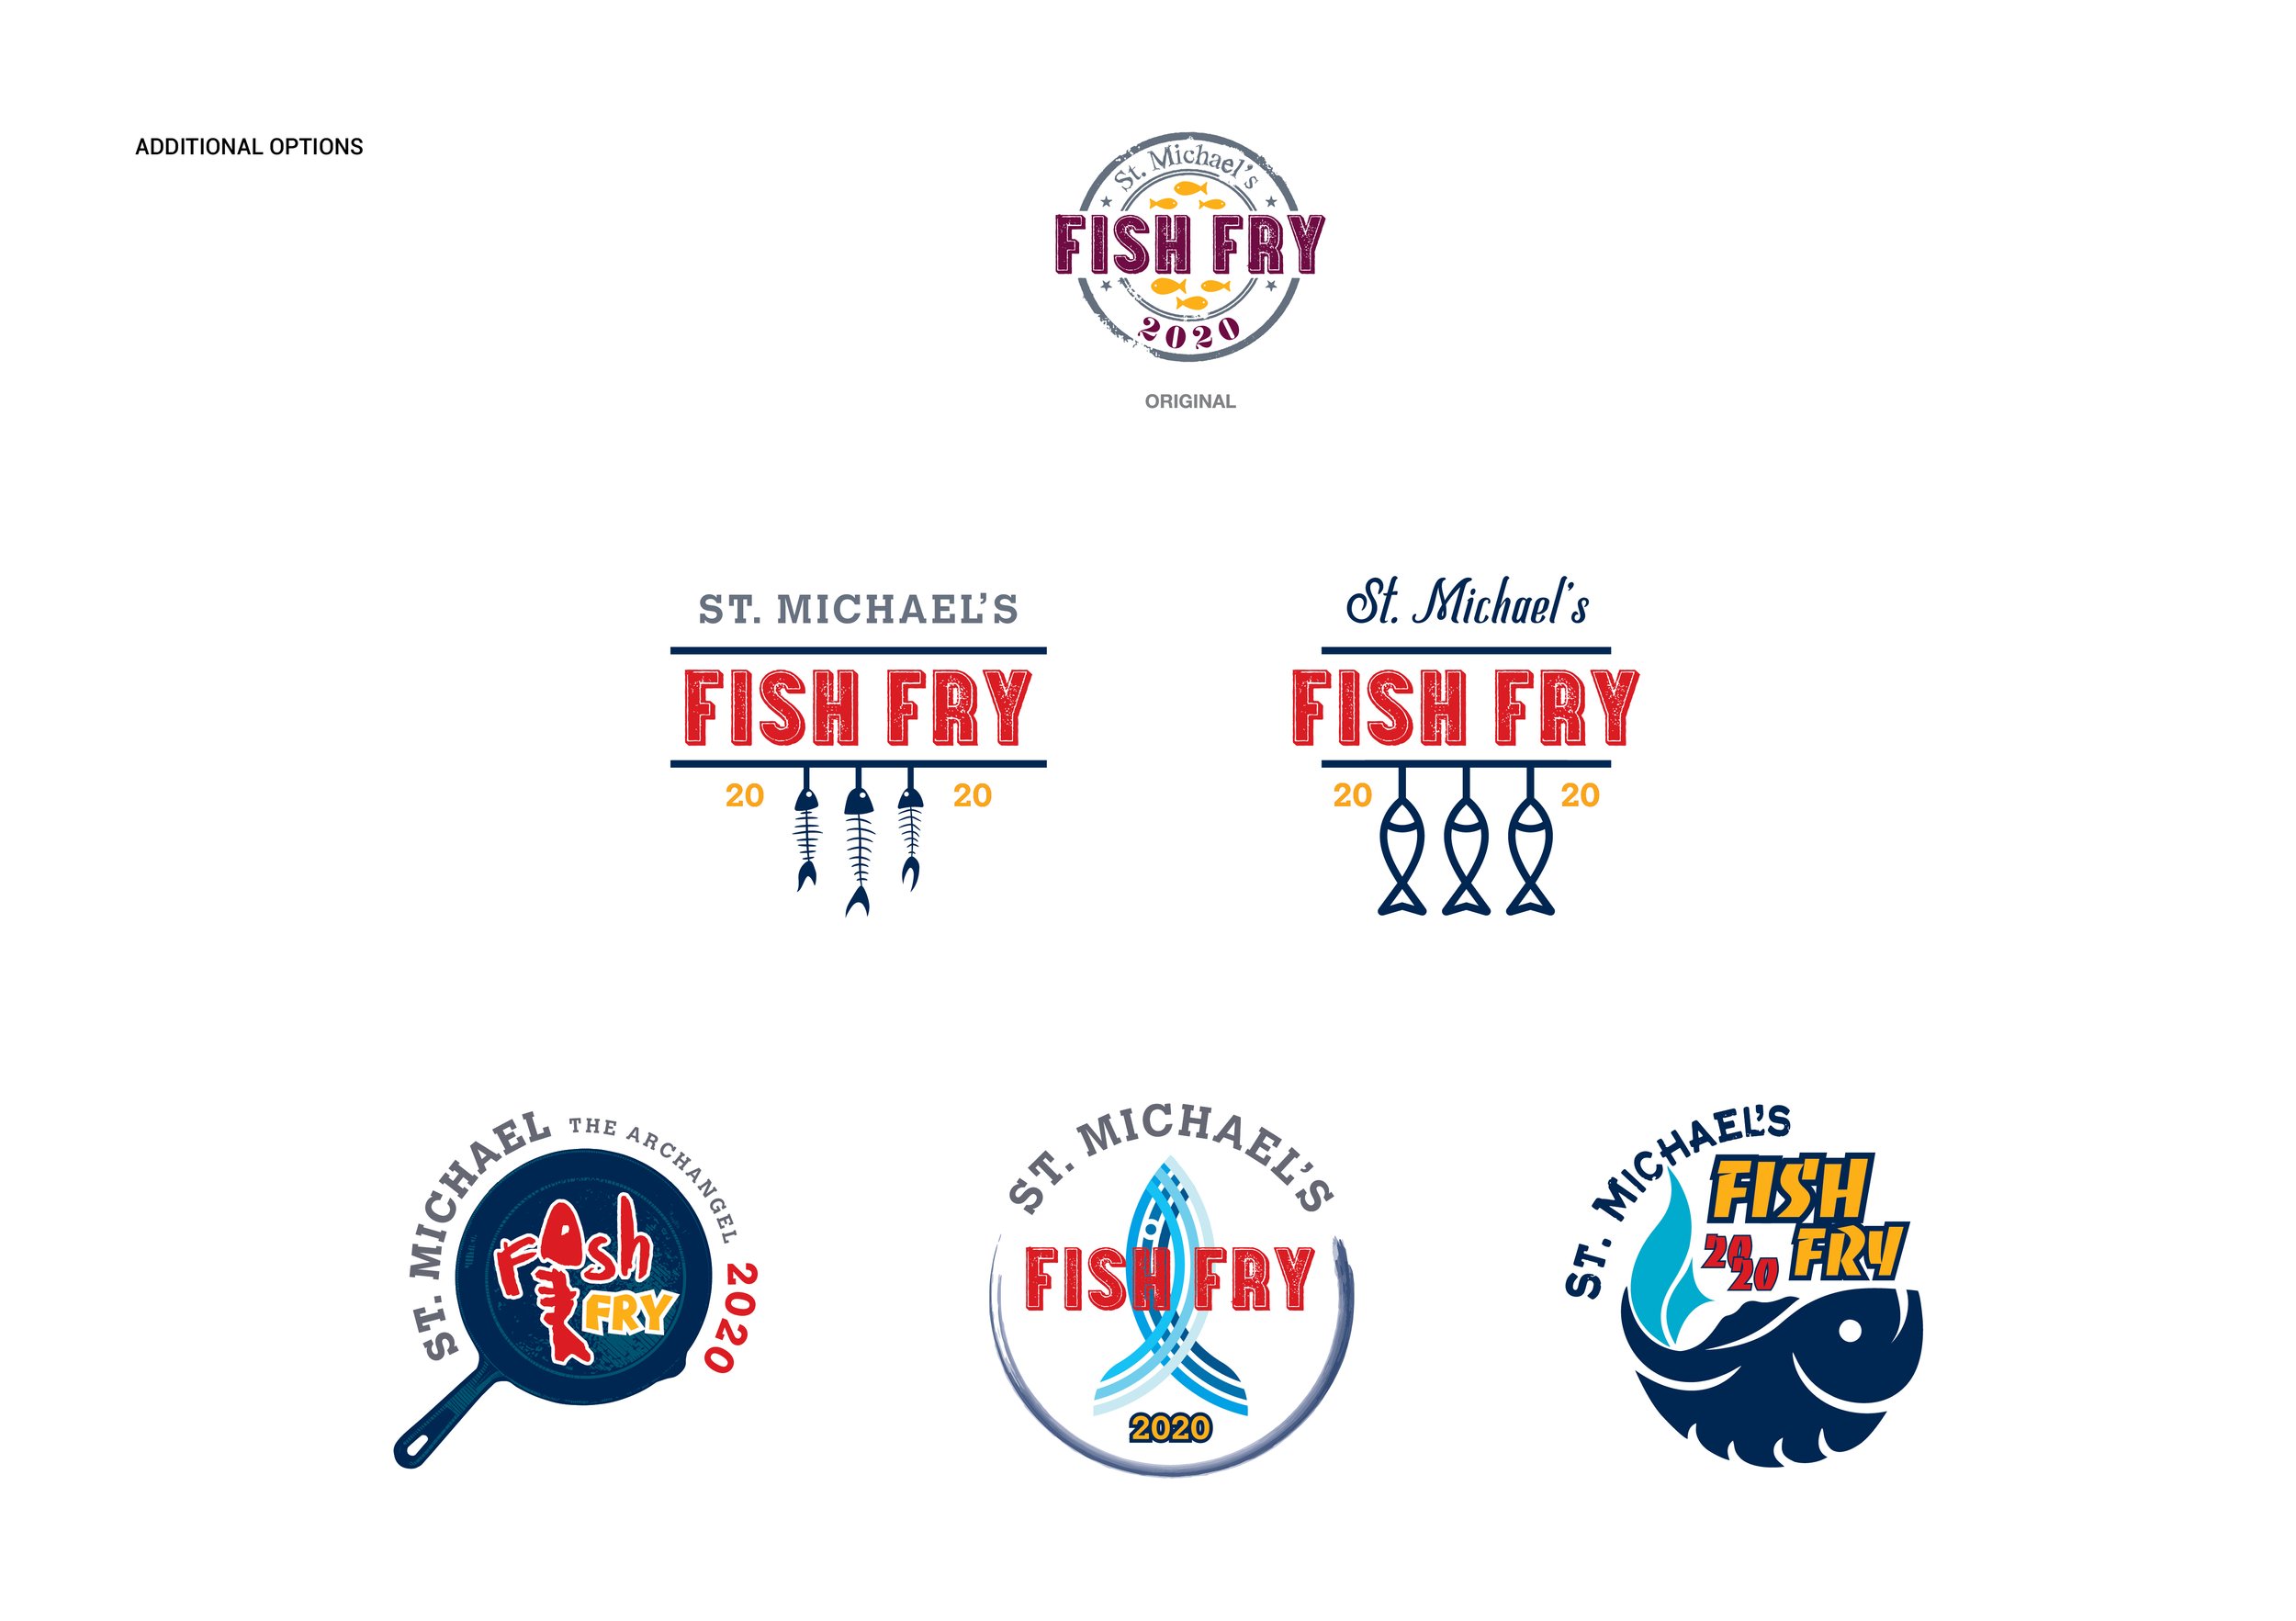 SMA_062921 - Fish Fry Logo Redesign - Portfolio Proof_PROOF copy 3.jpg